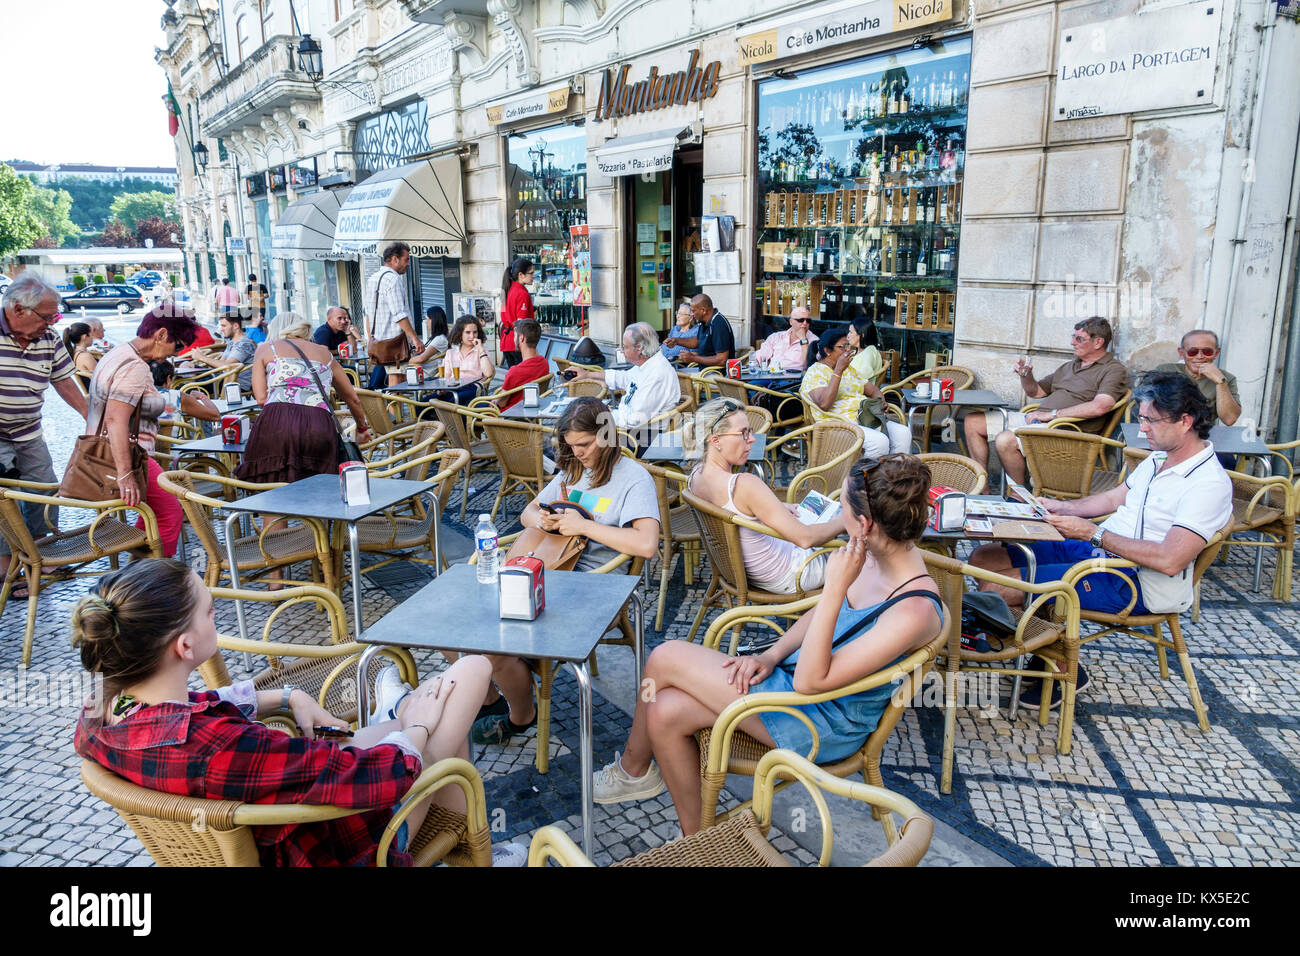 Coimbra Portugal,historic center,Largo da Portagem,main square,Cafe Montanha,restaurant restaurants food dining cafe cafes,al fresco,sidewalk outside Stock Photo